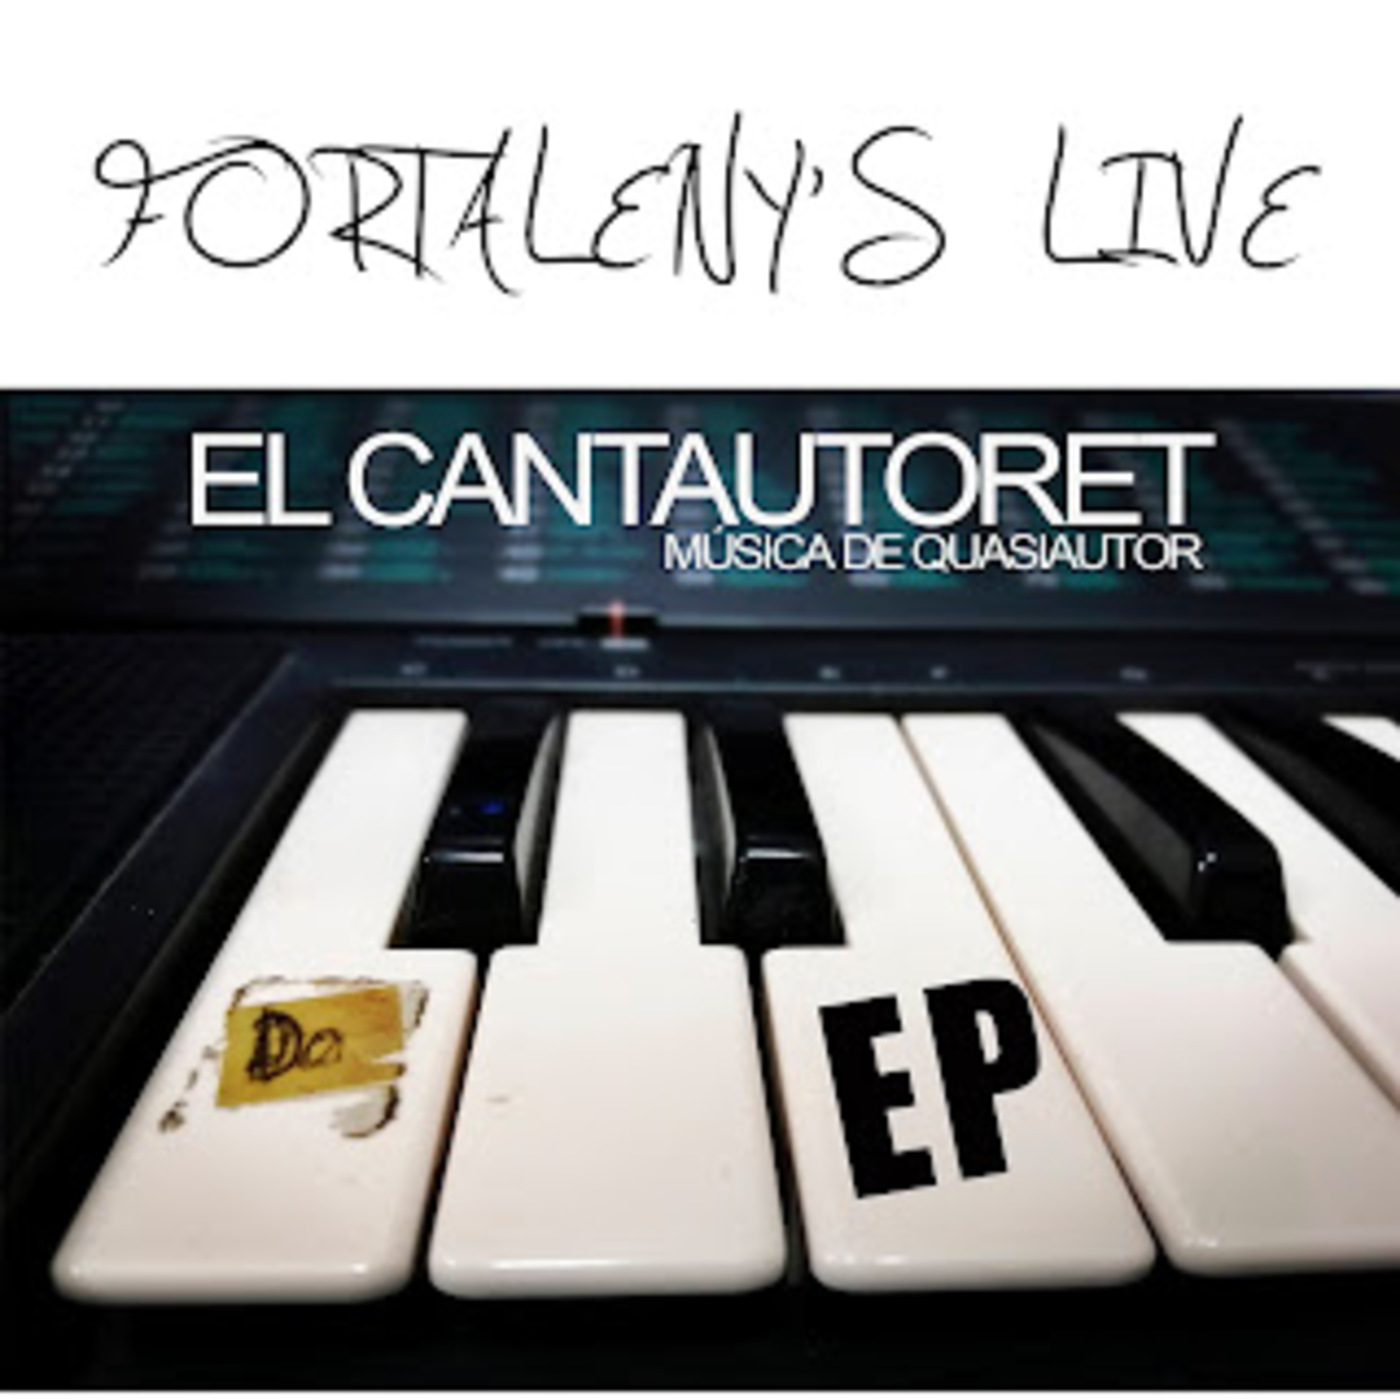 El Cantautoret - En directe des de Fortaleny (Fortaleny's Lives) | musica en valencià